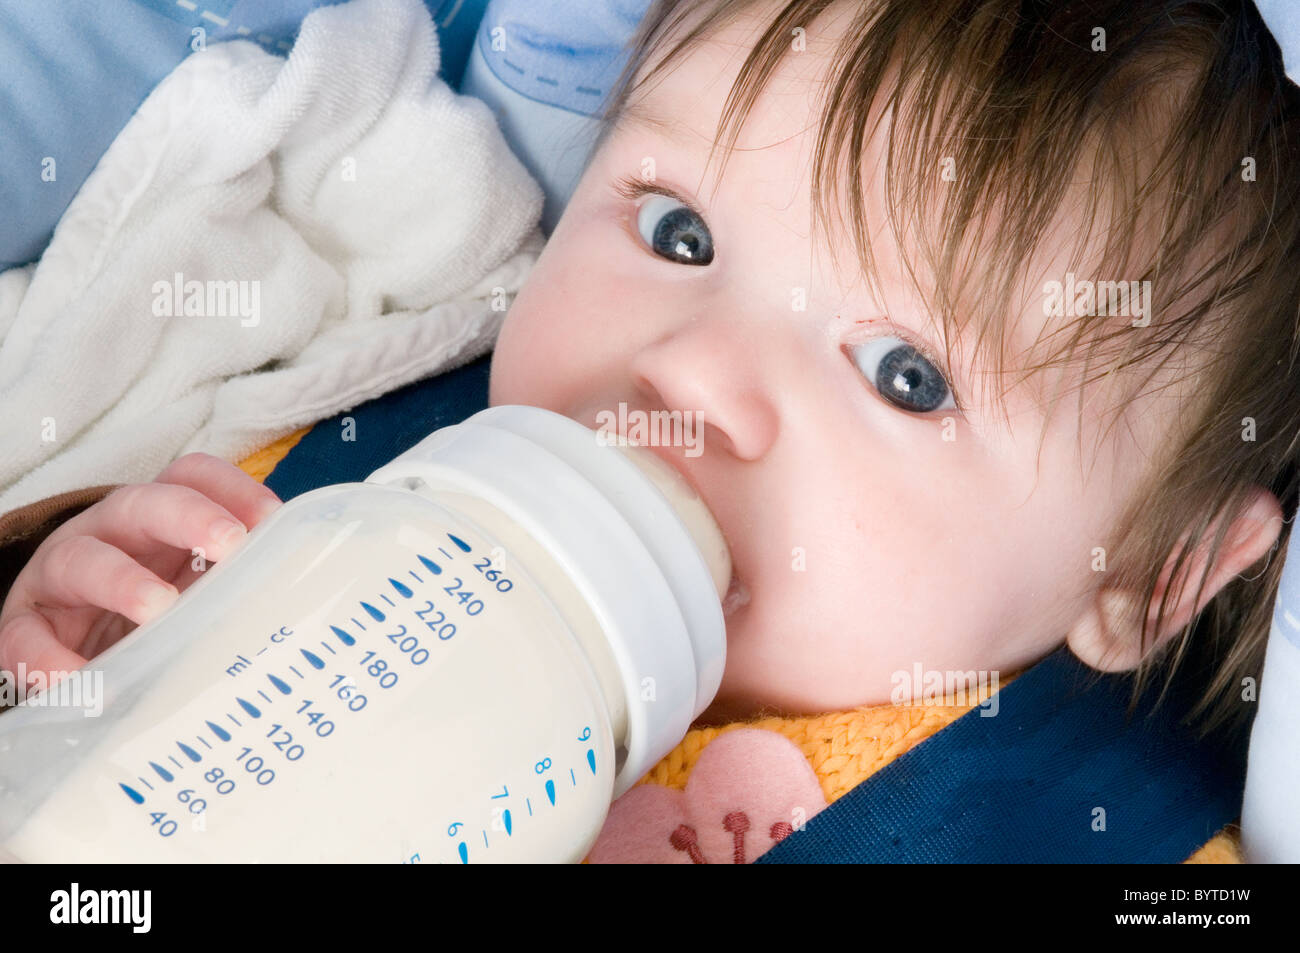 baby bottle feeding bottles feed 